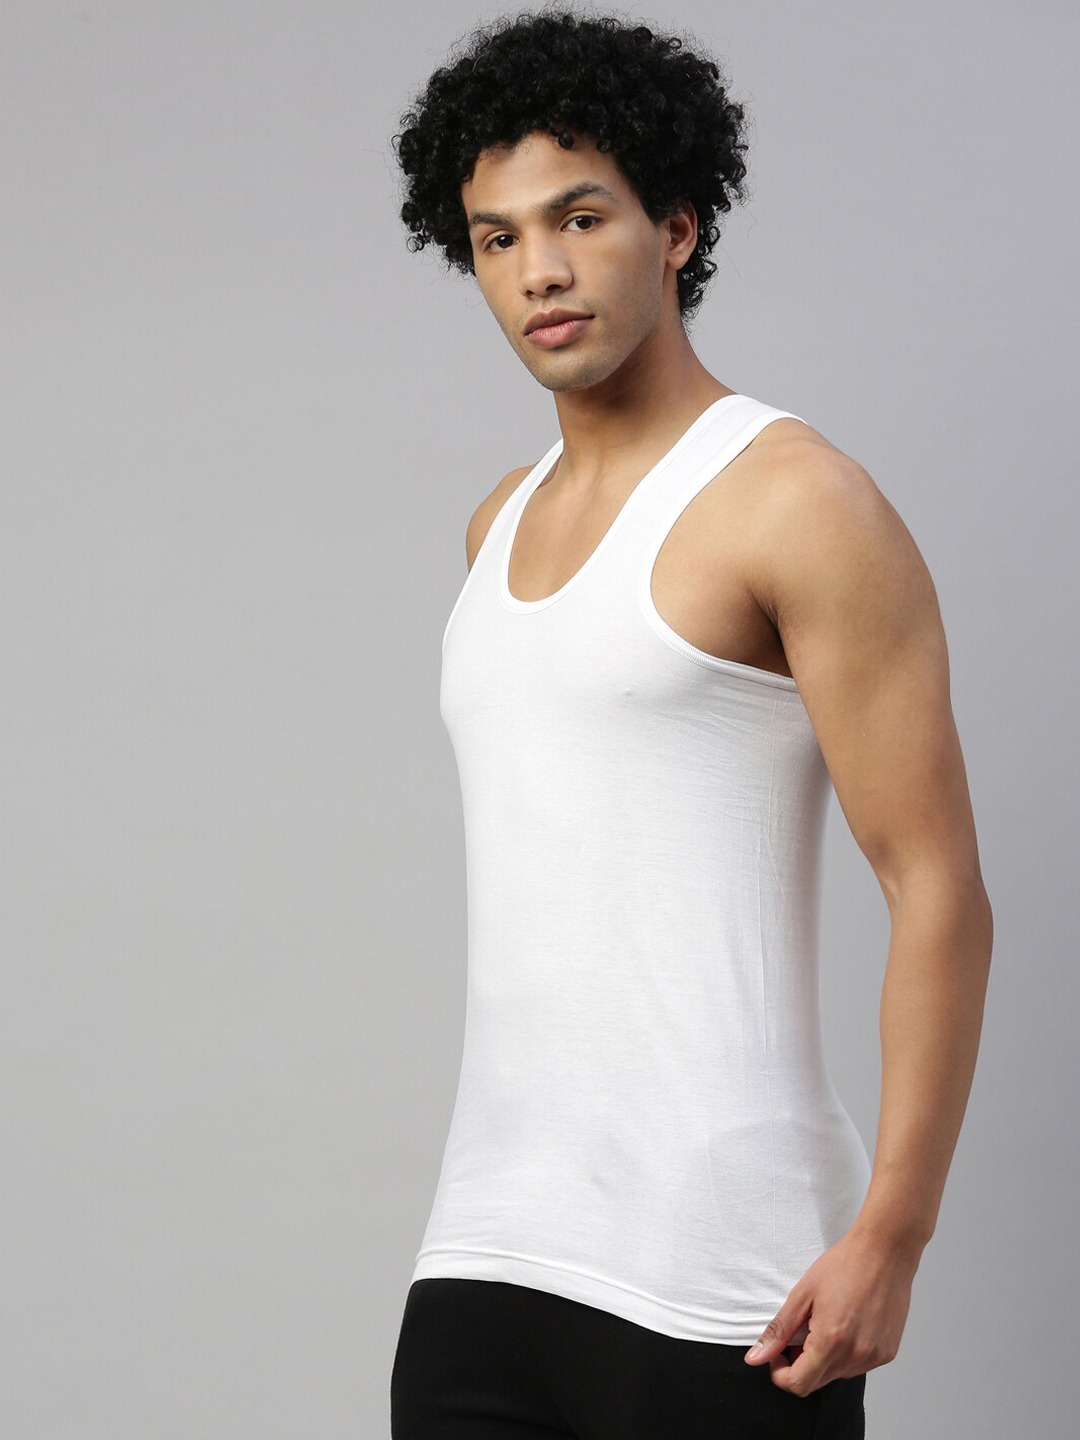 Clothing Innerwear Vests | DIXCY SCOTT MAXIMUS Men White Pure Cotton Gym Vest - BW54478